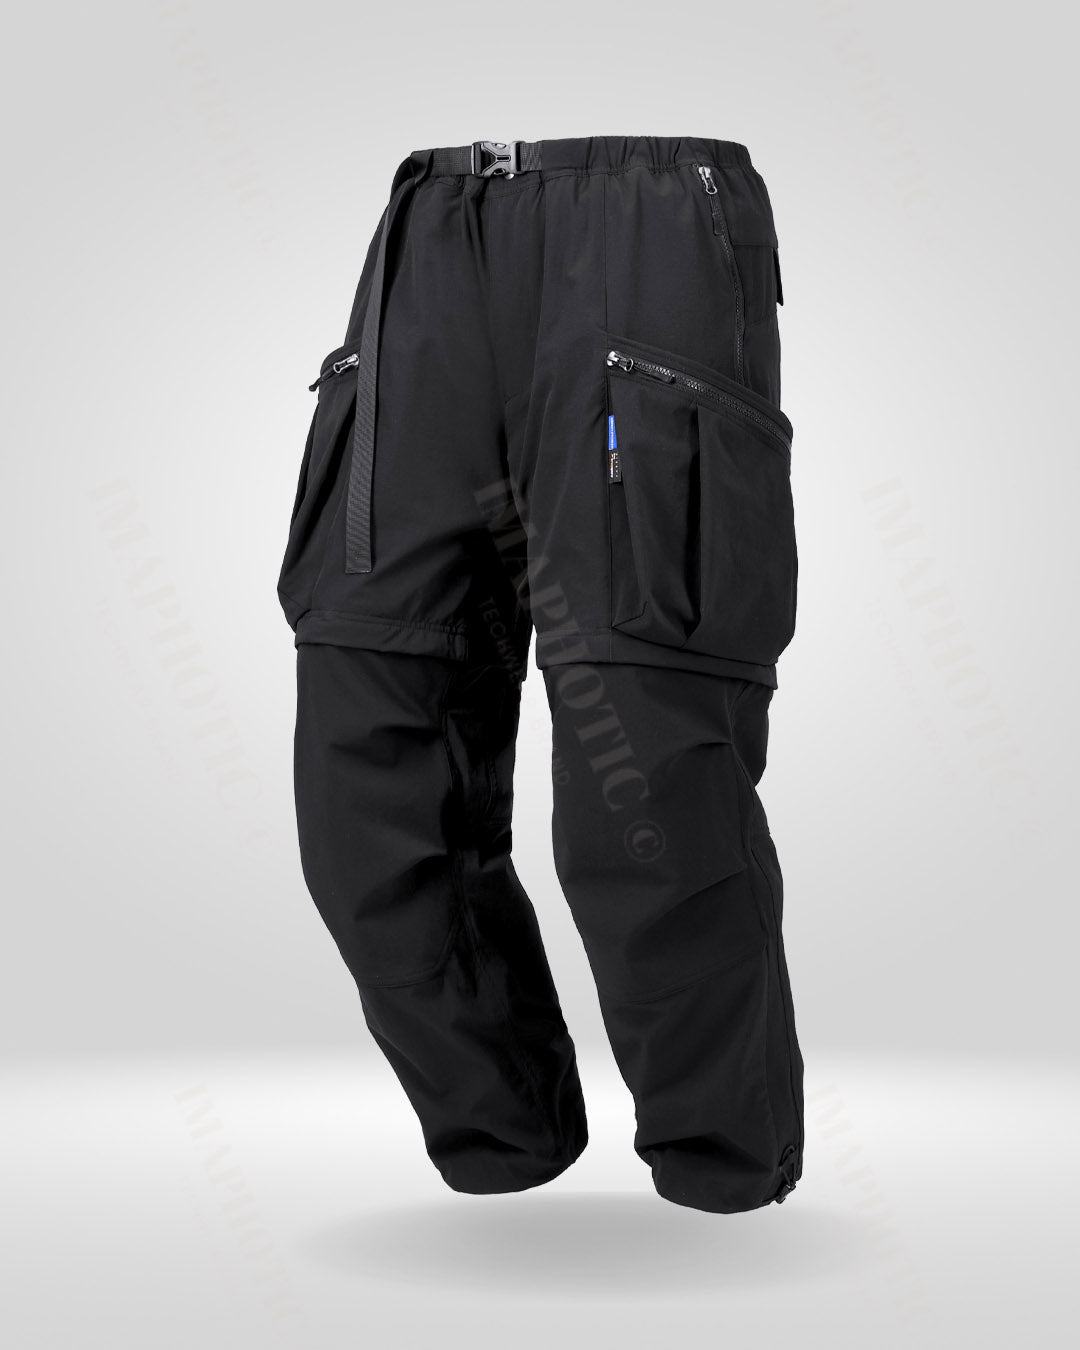 Black Zip-Off Pants, Zippable Pants